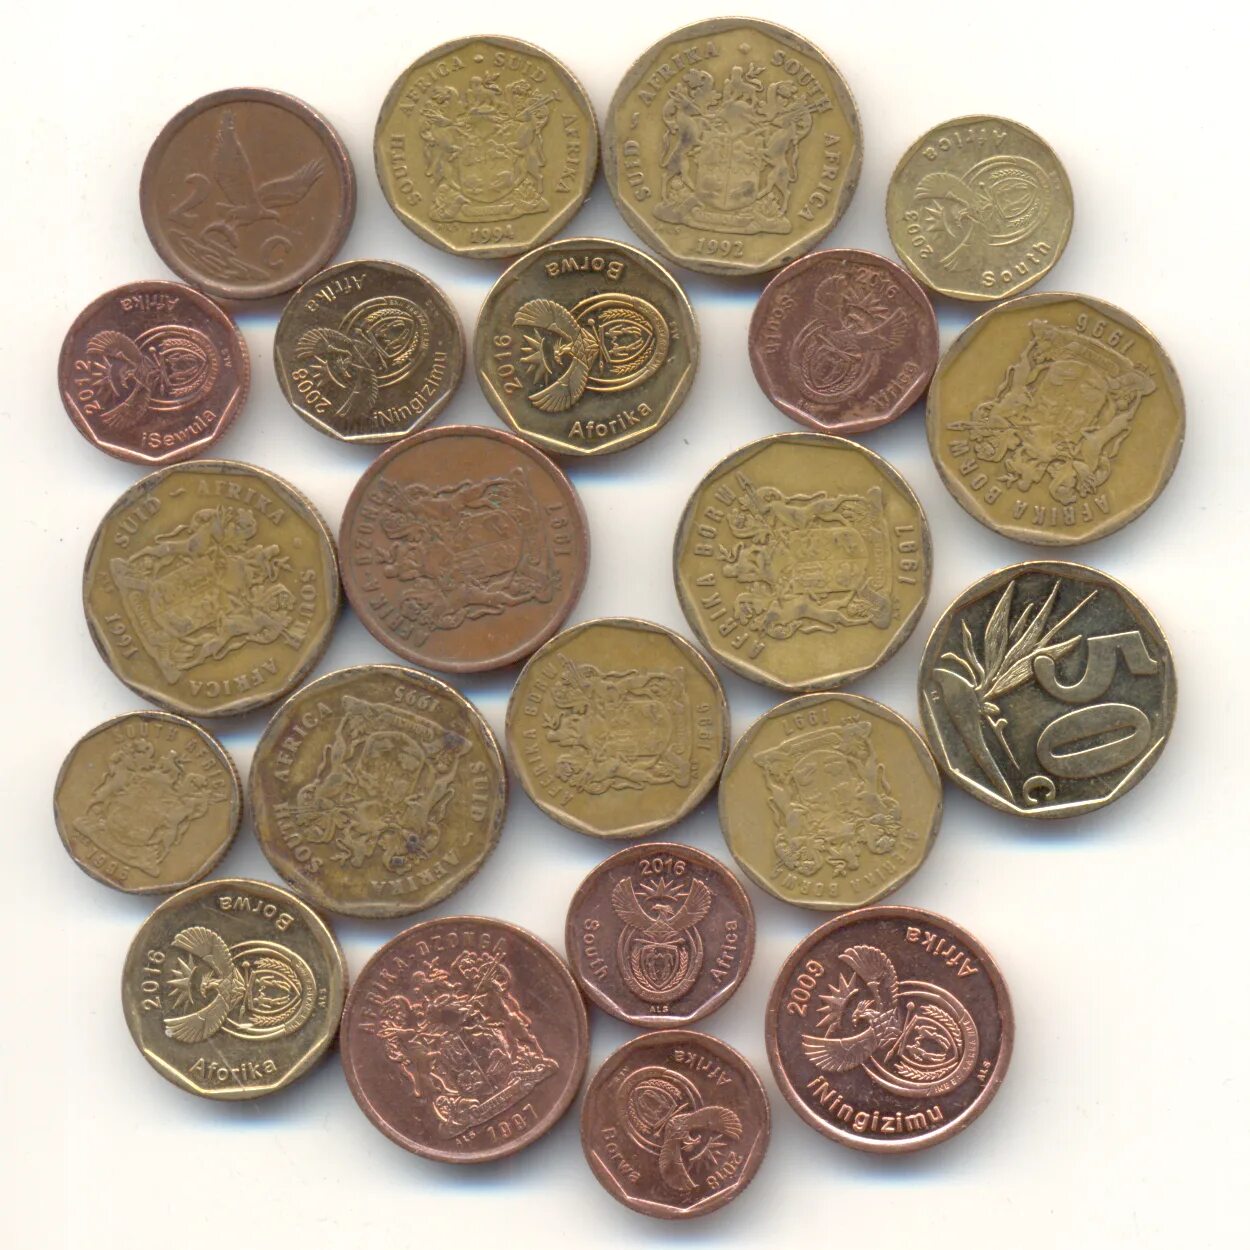 Аукцион монет купить монеты. Монеты ЮАР. Монеты Южной Африки. Аукцион монет. Современные монеты ЮАР.